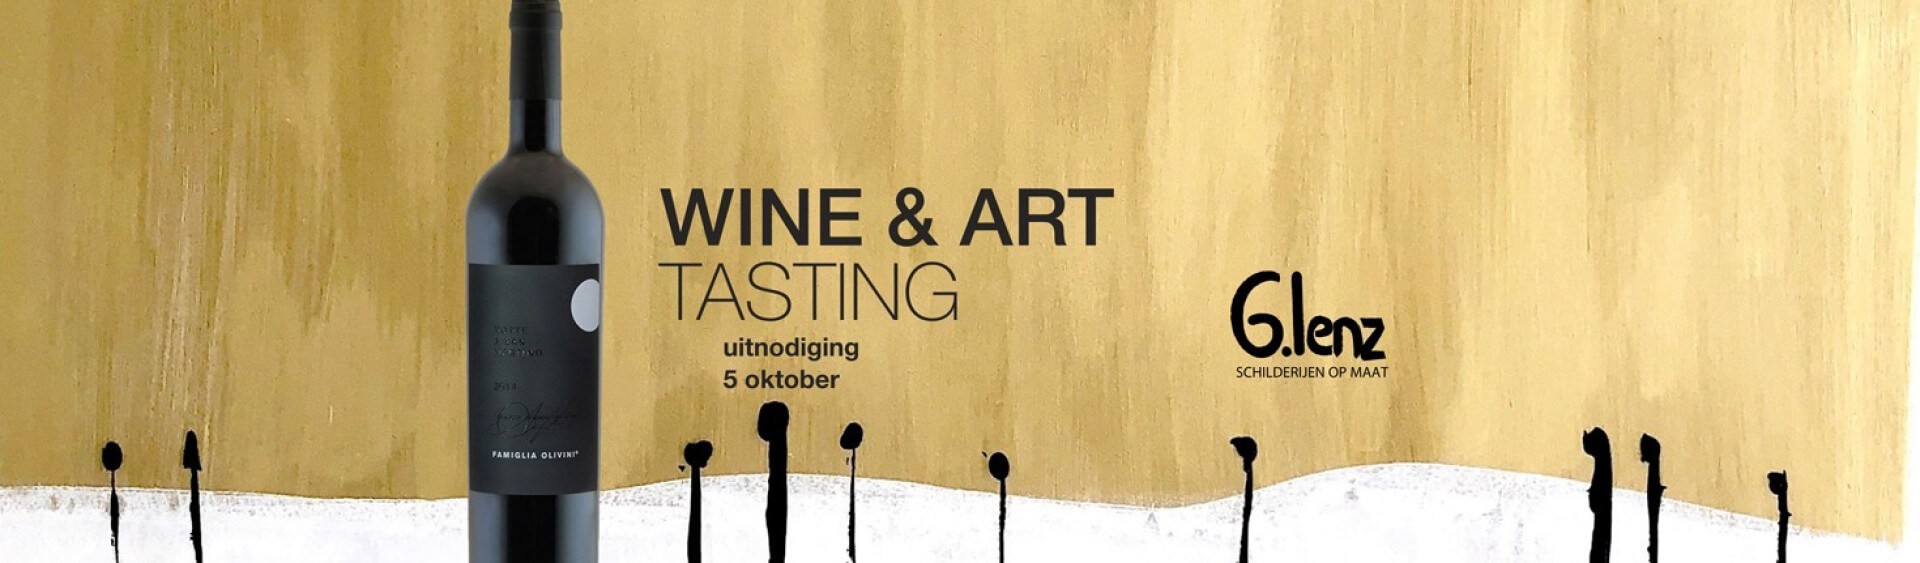 WINE & ART TASTING 5 oktober